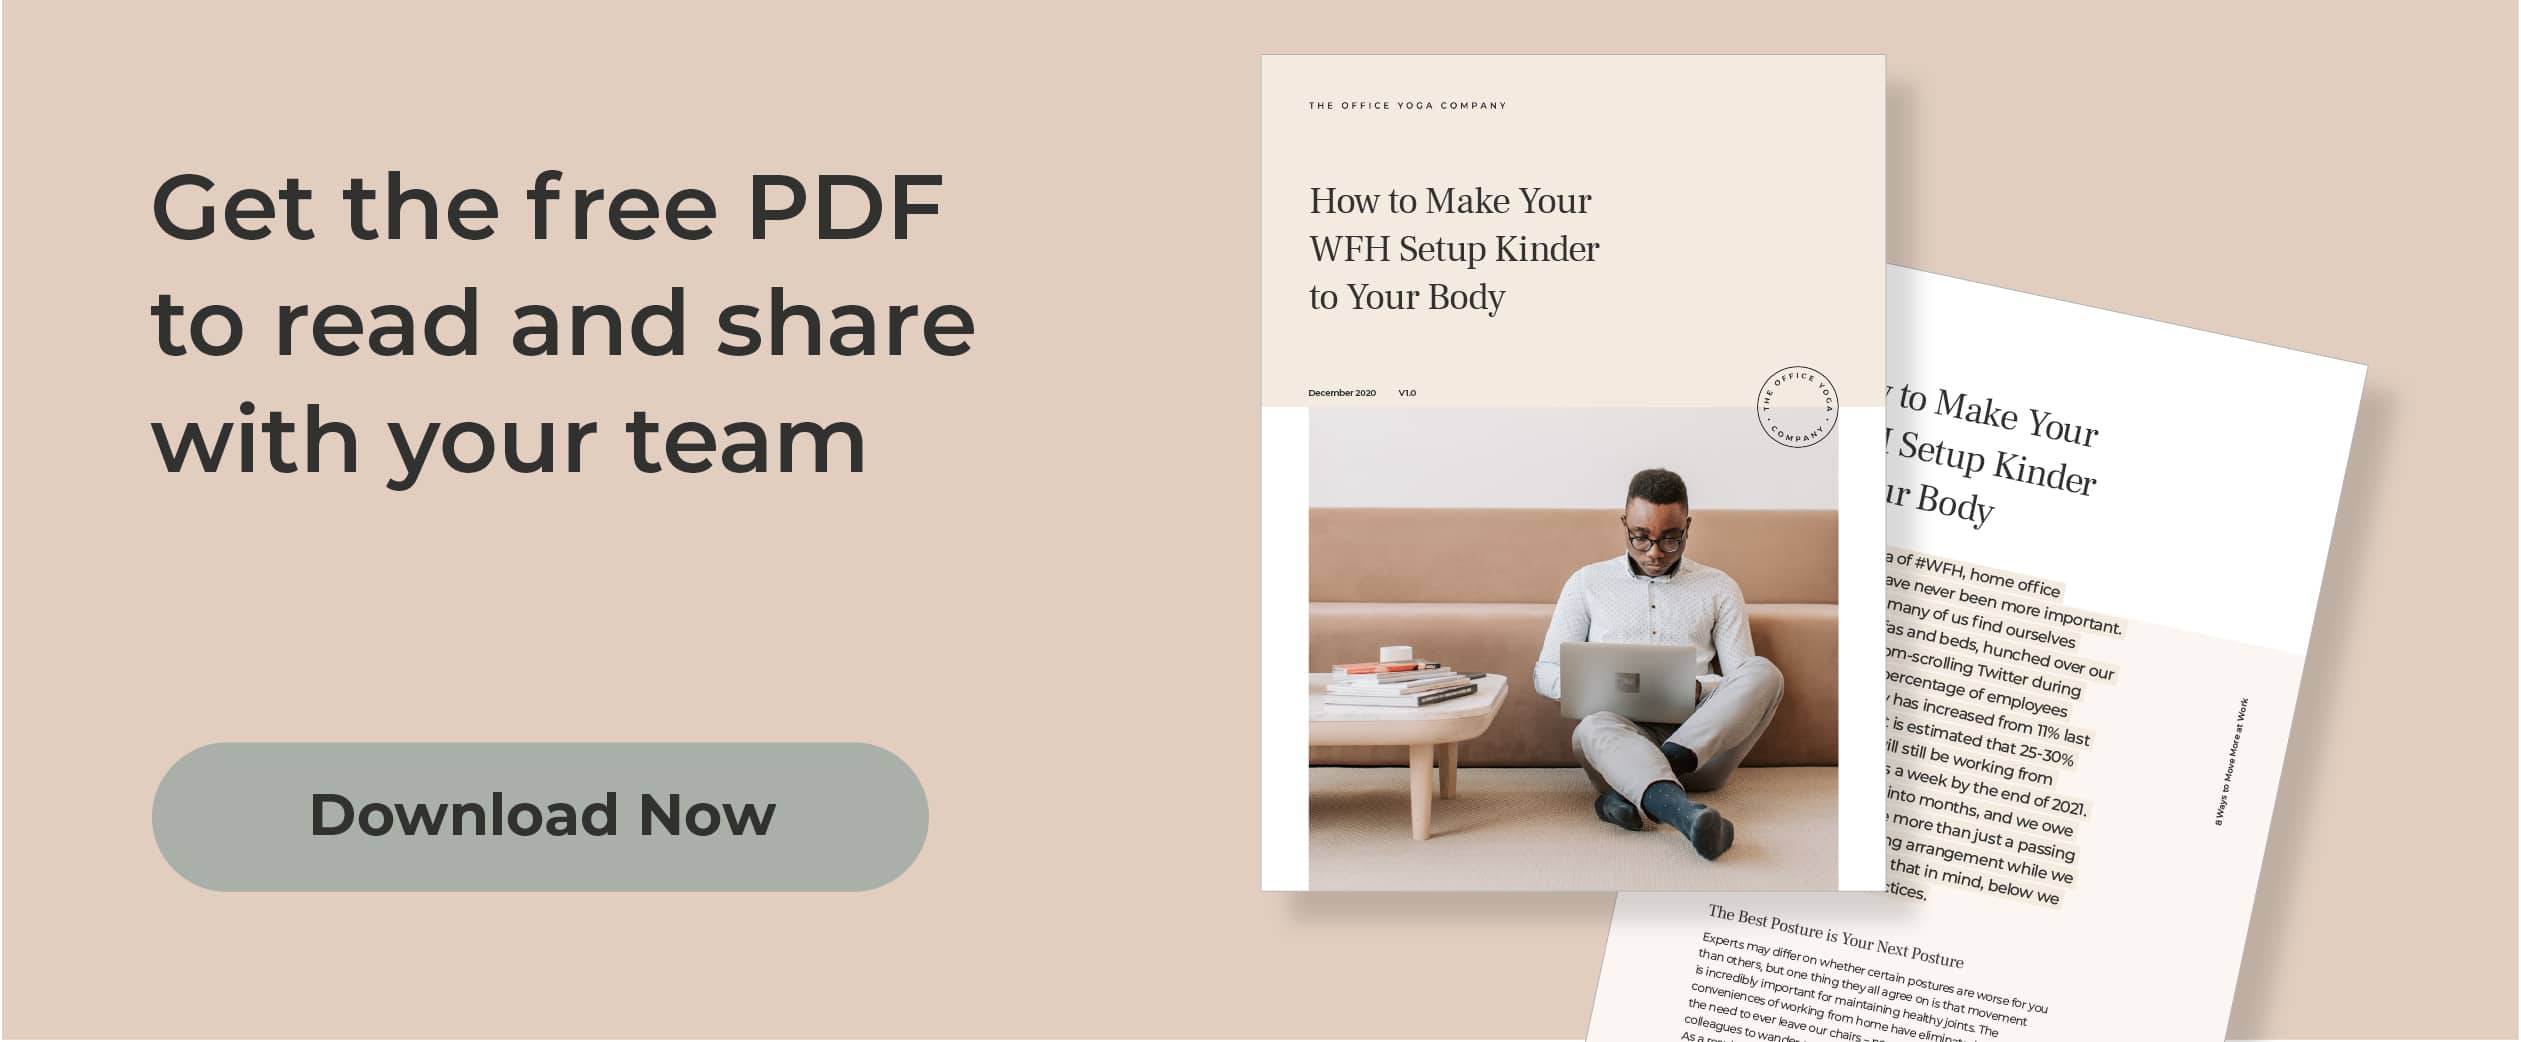 Download the free PDF